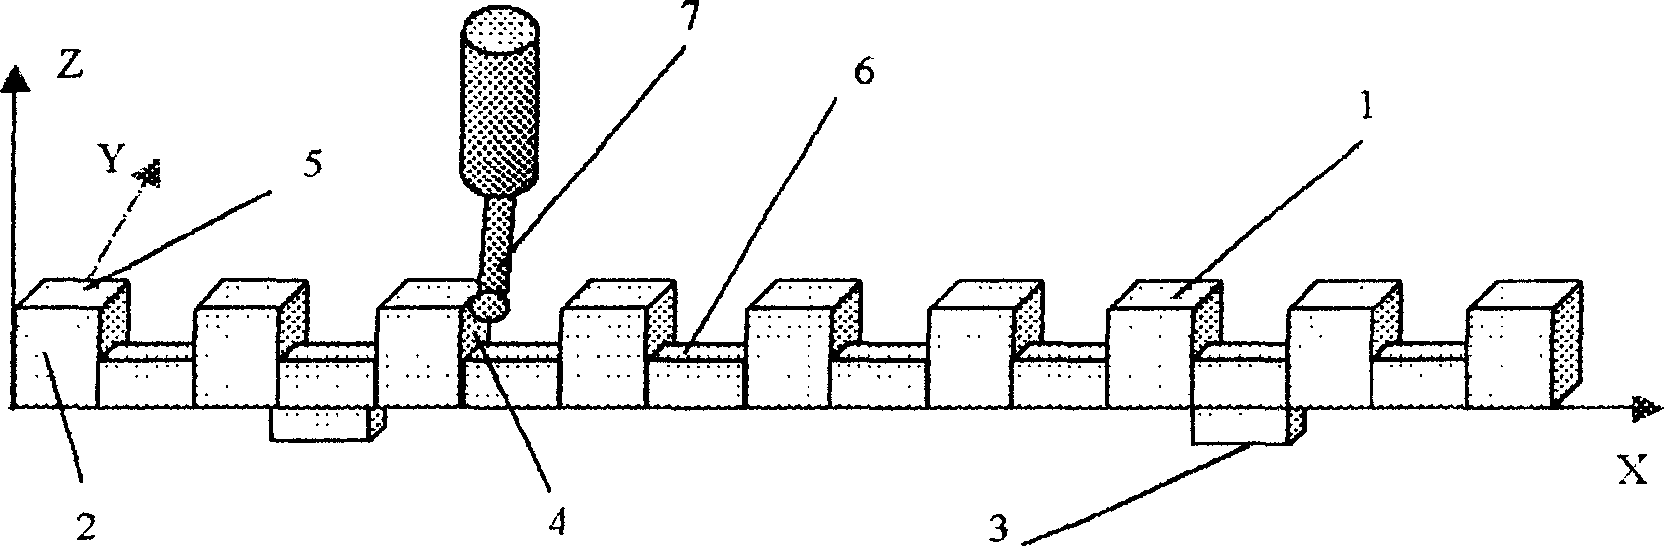 Granite step gauge measuring device